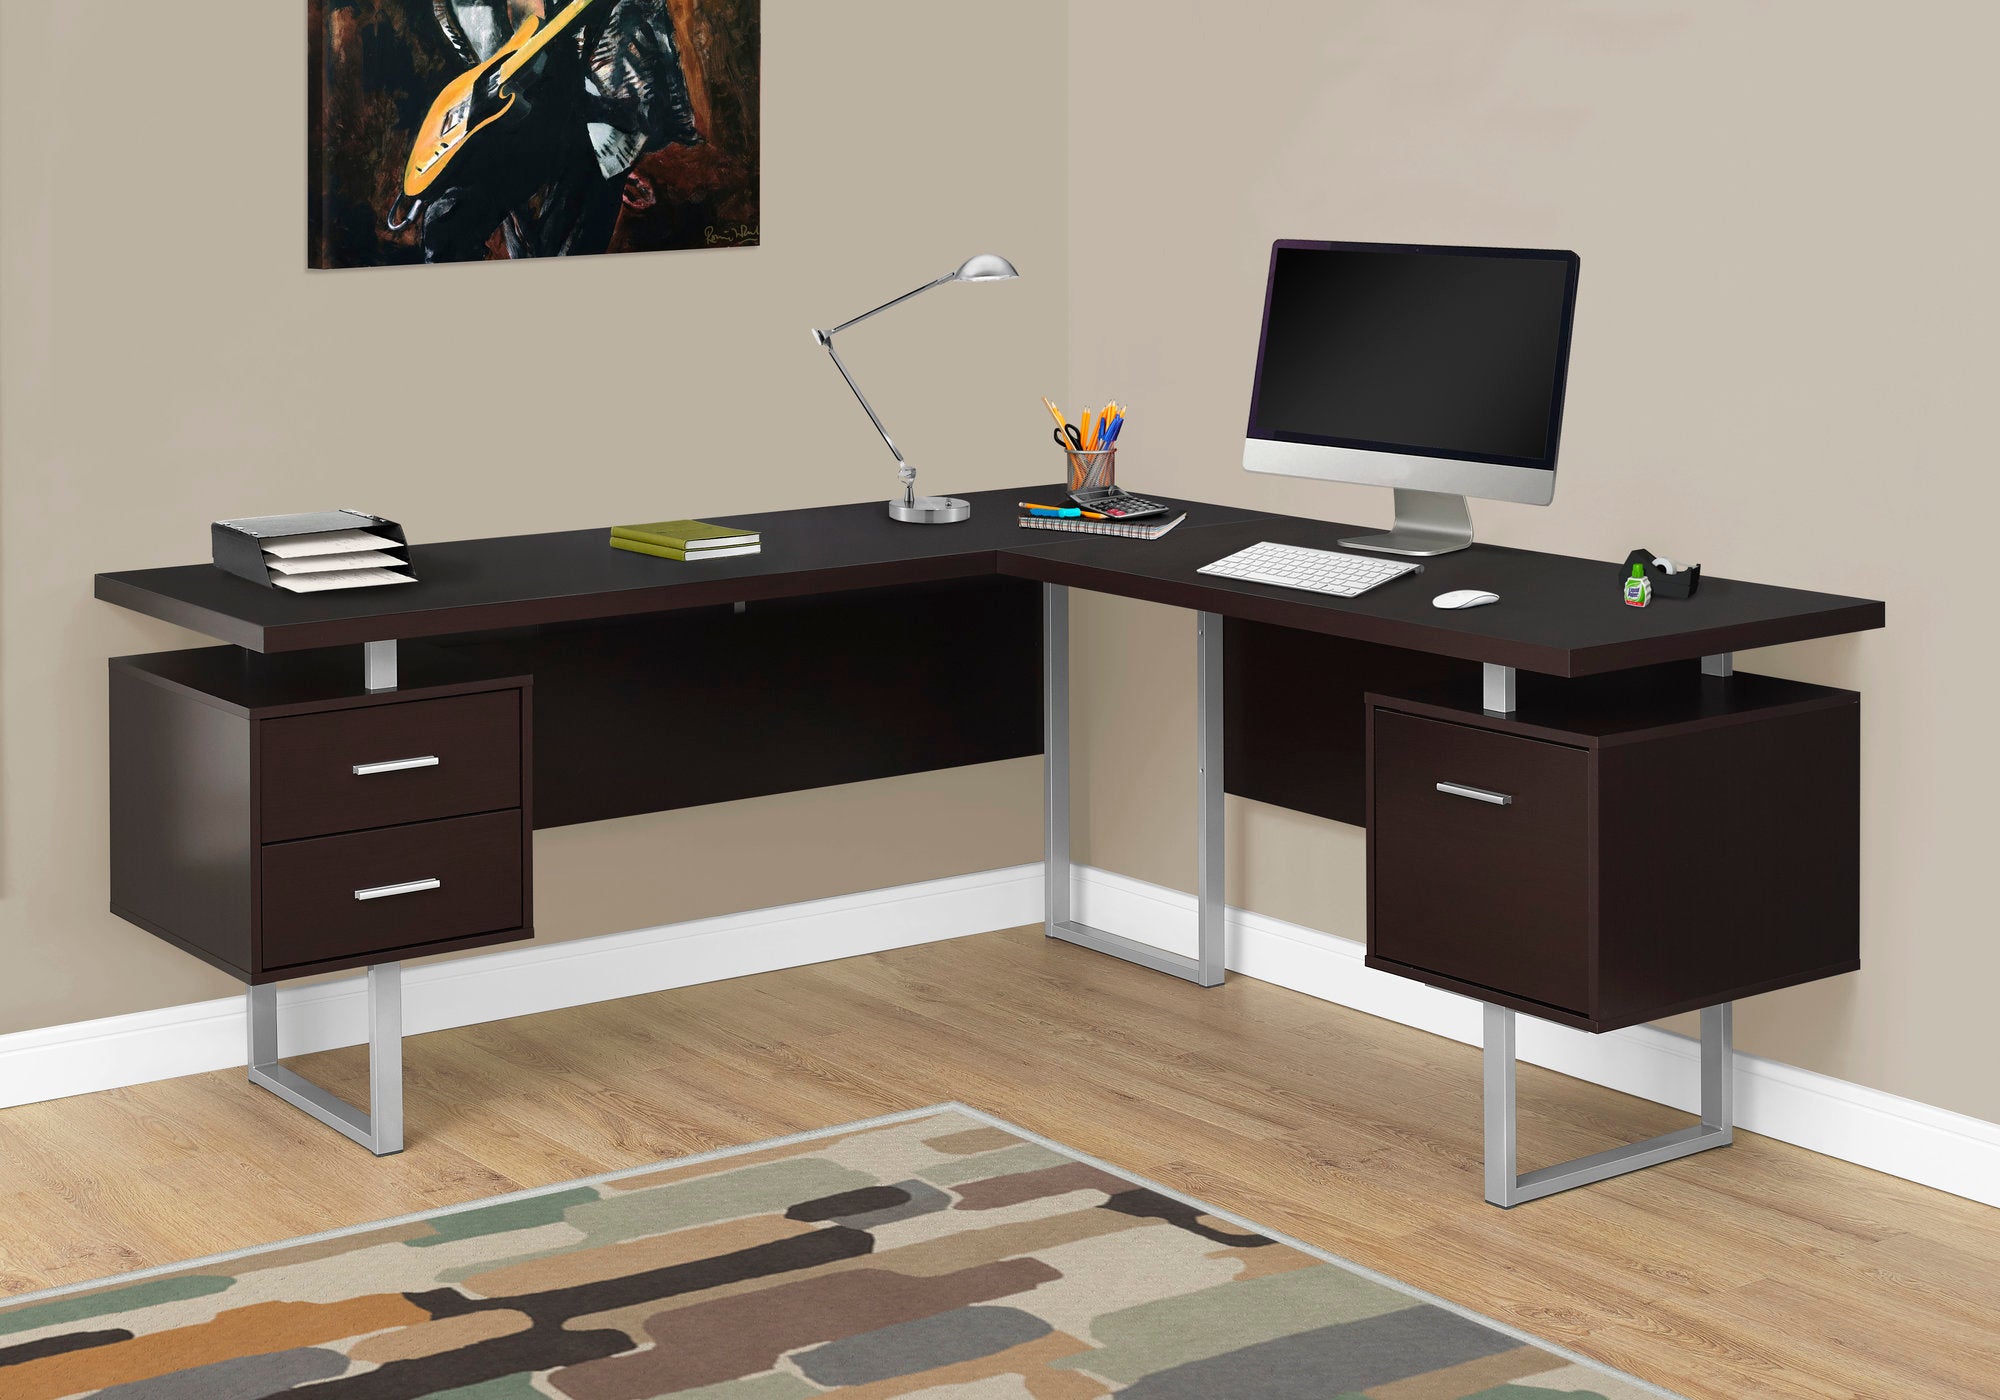 MN-987305    Computer Desk, Home Office, Corner, Left, Right Set-Up, Storage Drawers, 70"L, L Shape, Metal, Laminate, Dark Brown, Silver, Contemporary, Modern